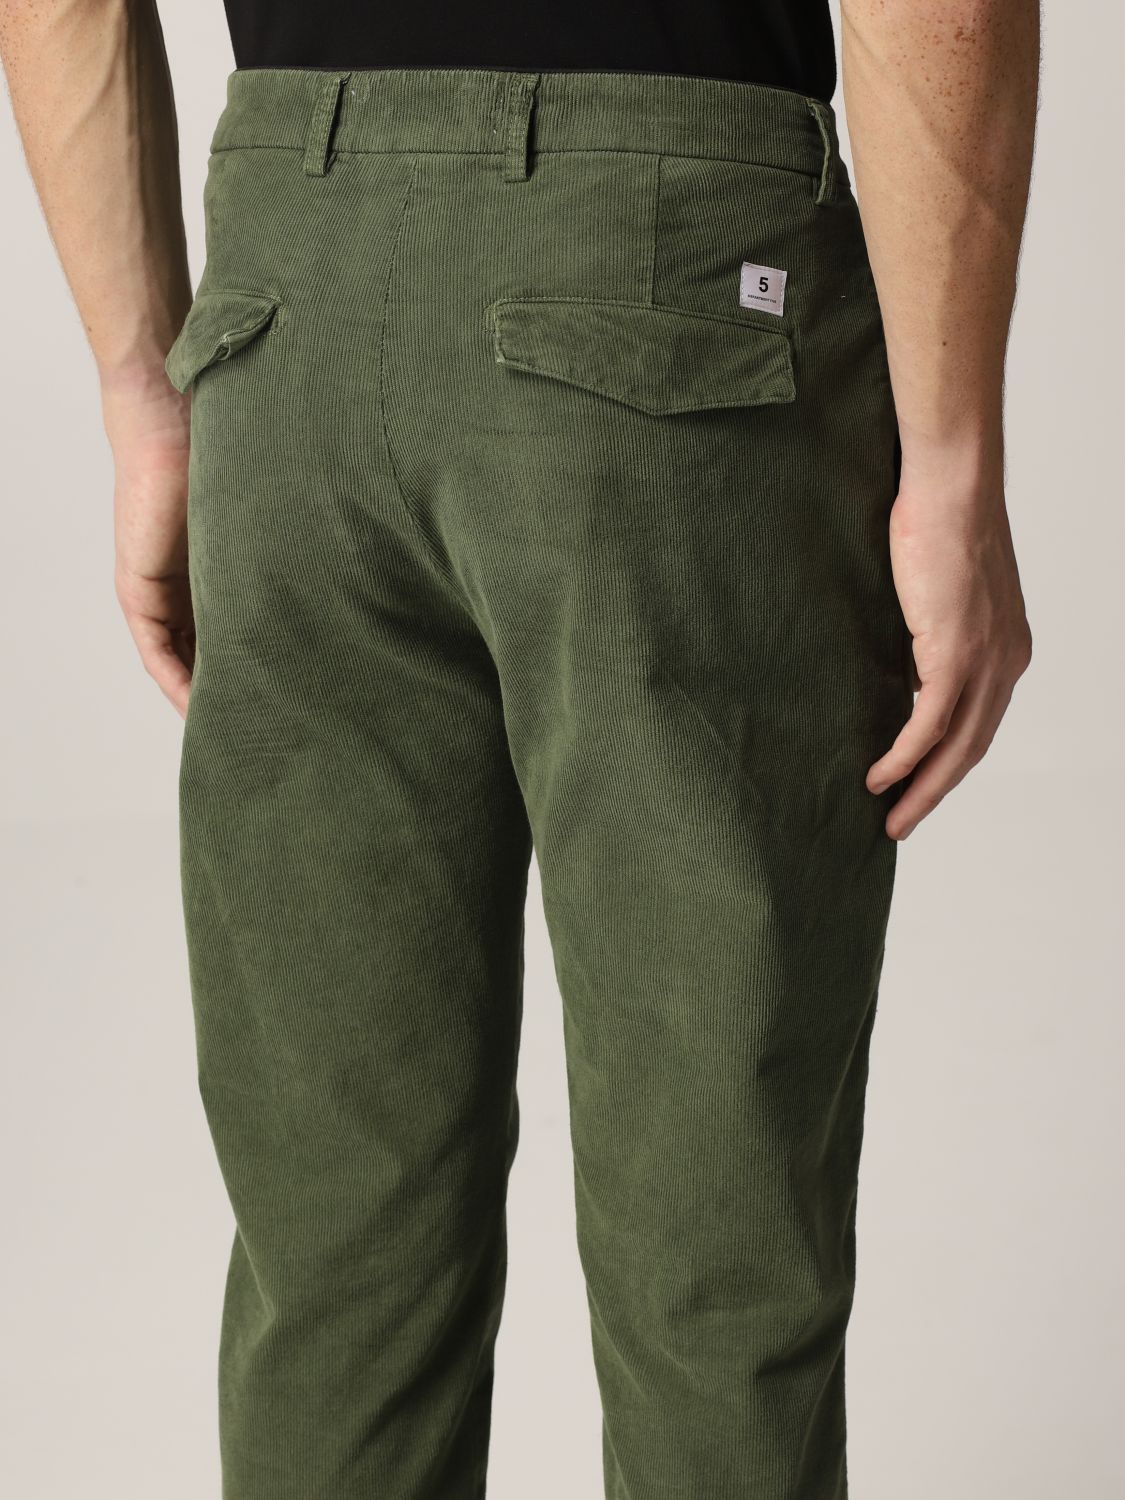 Men s casual jeans trousers Khaki / Green / Black | 11street Malaysia - Pants